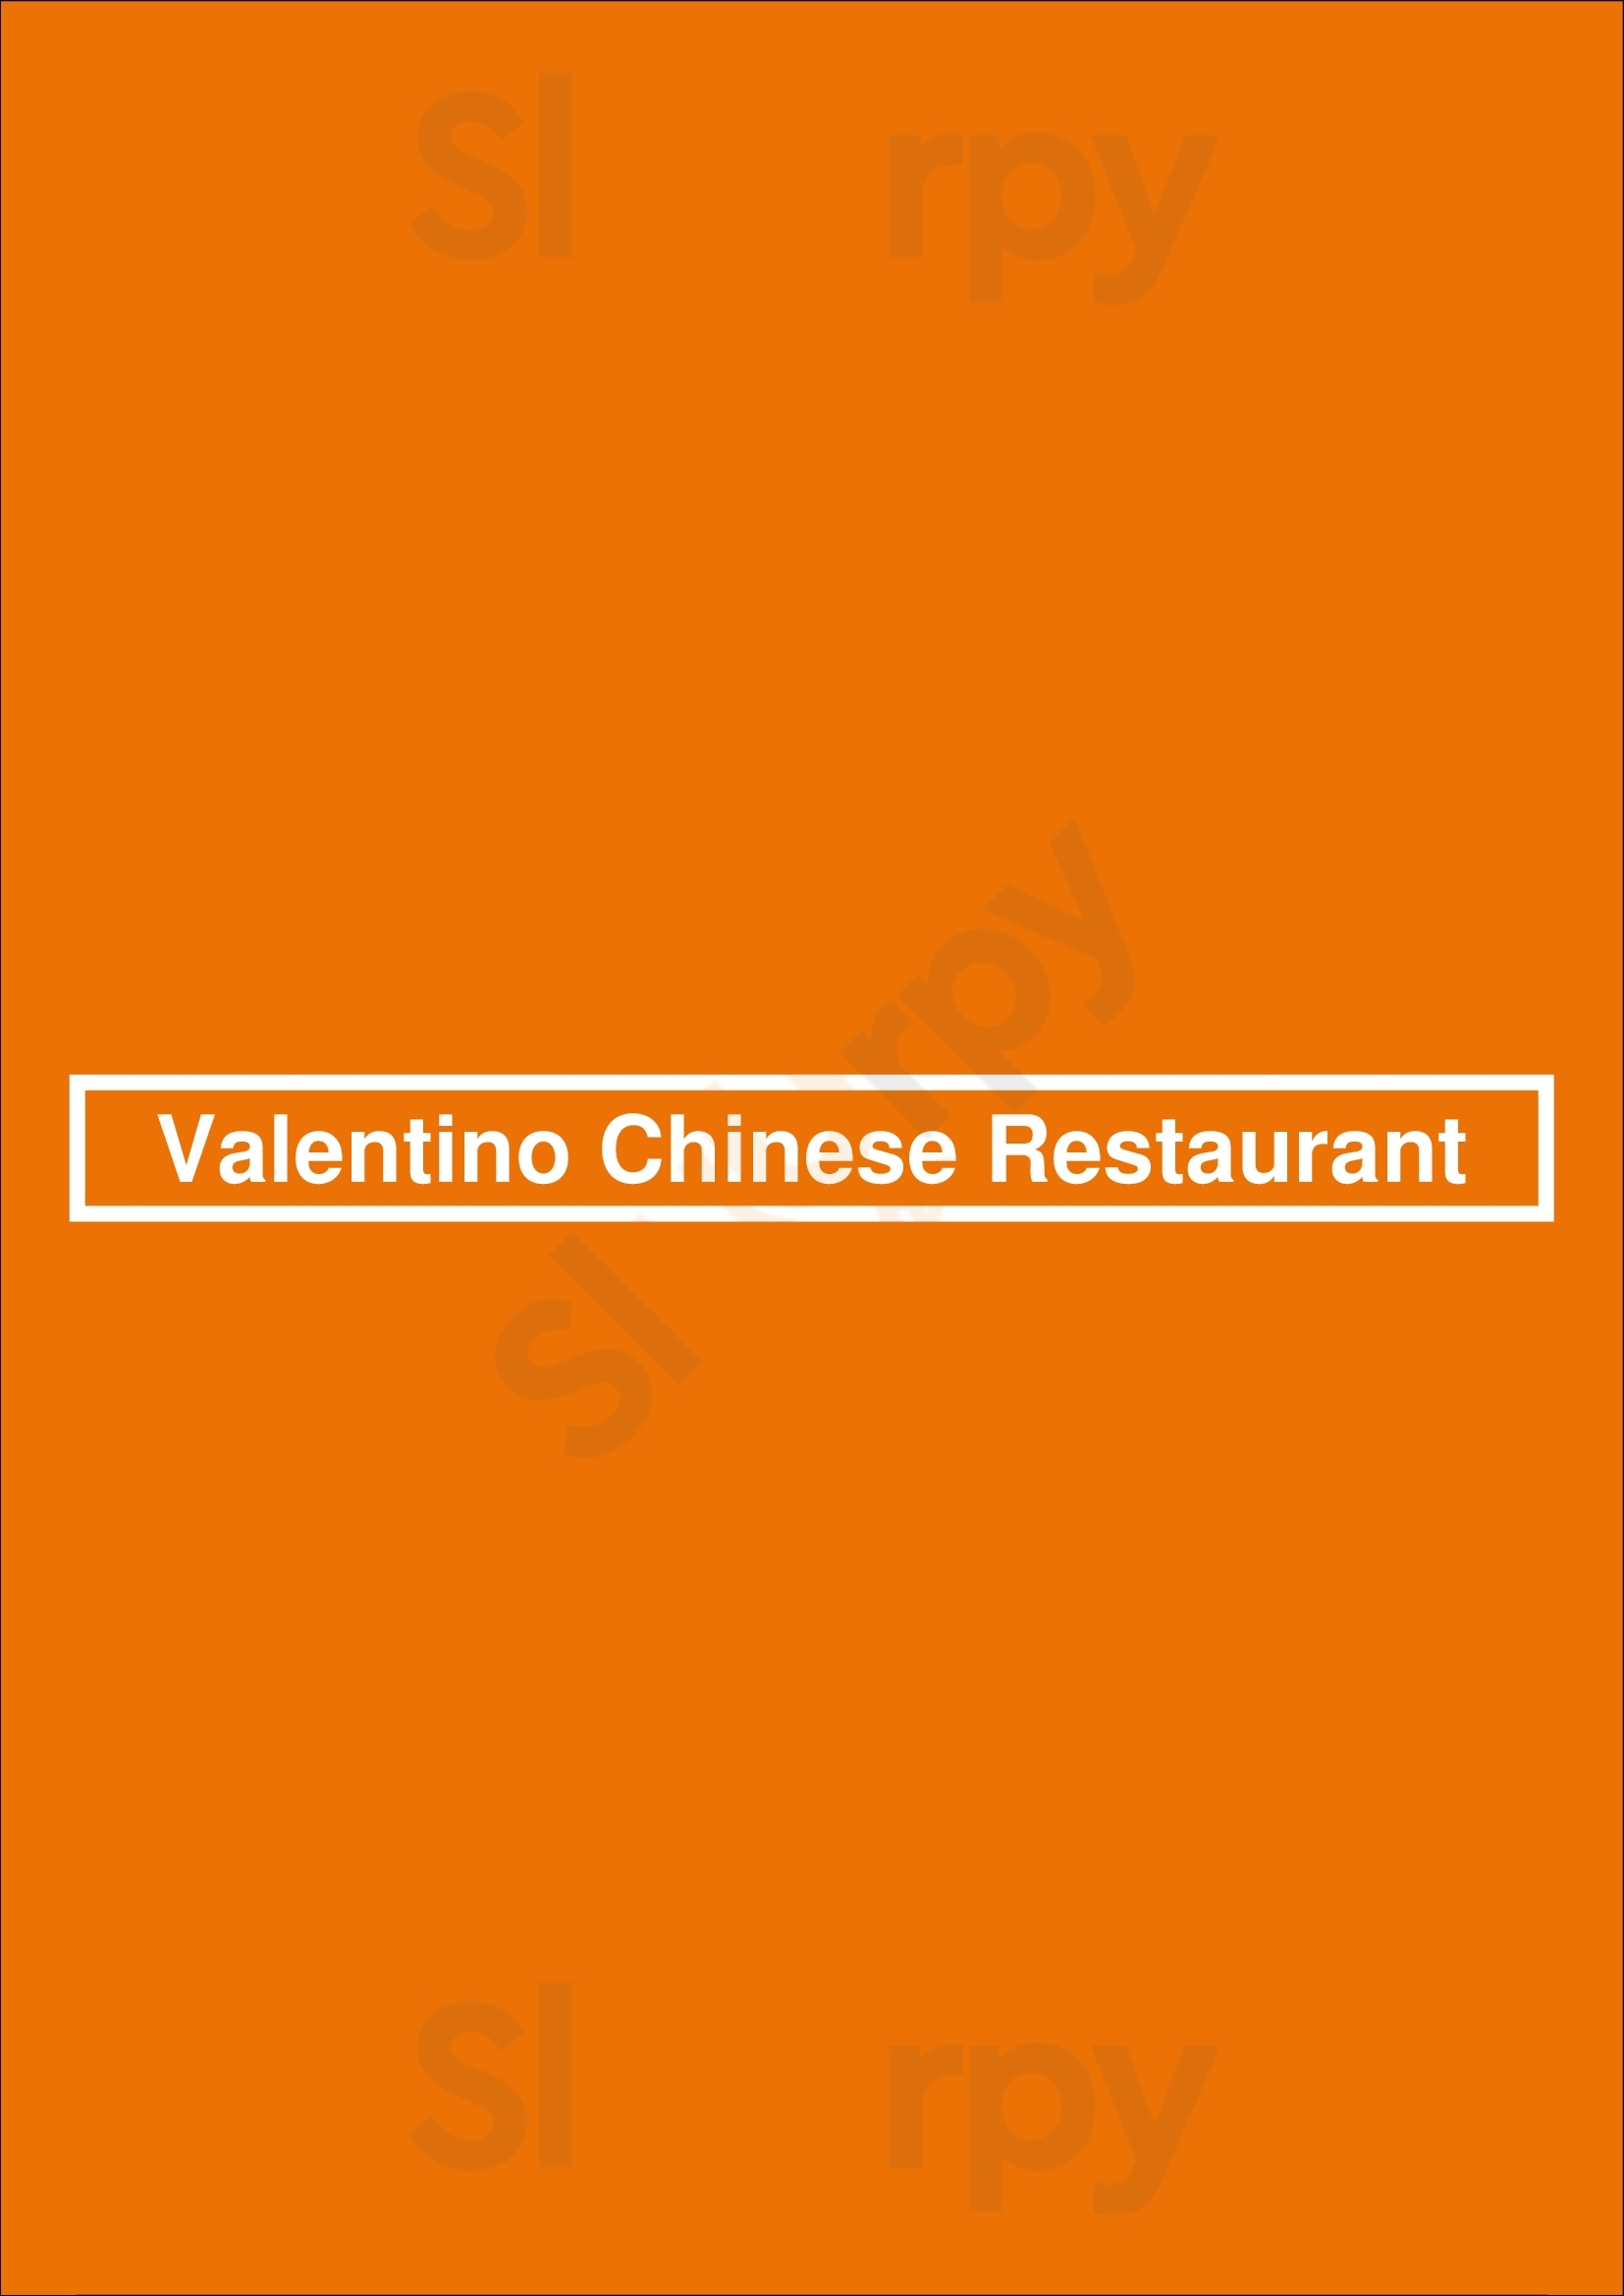 Valentino Chinese Restaurant Dallas Menu - 1